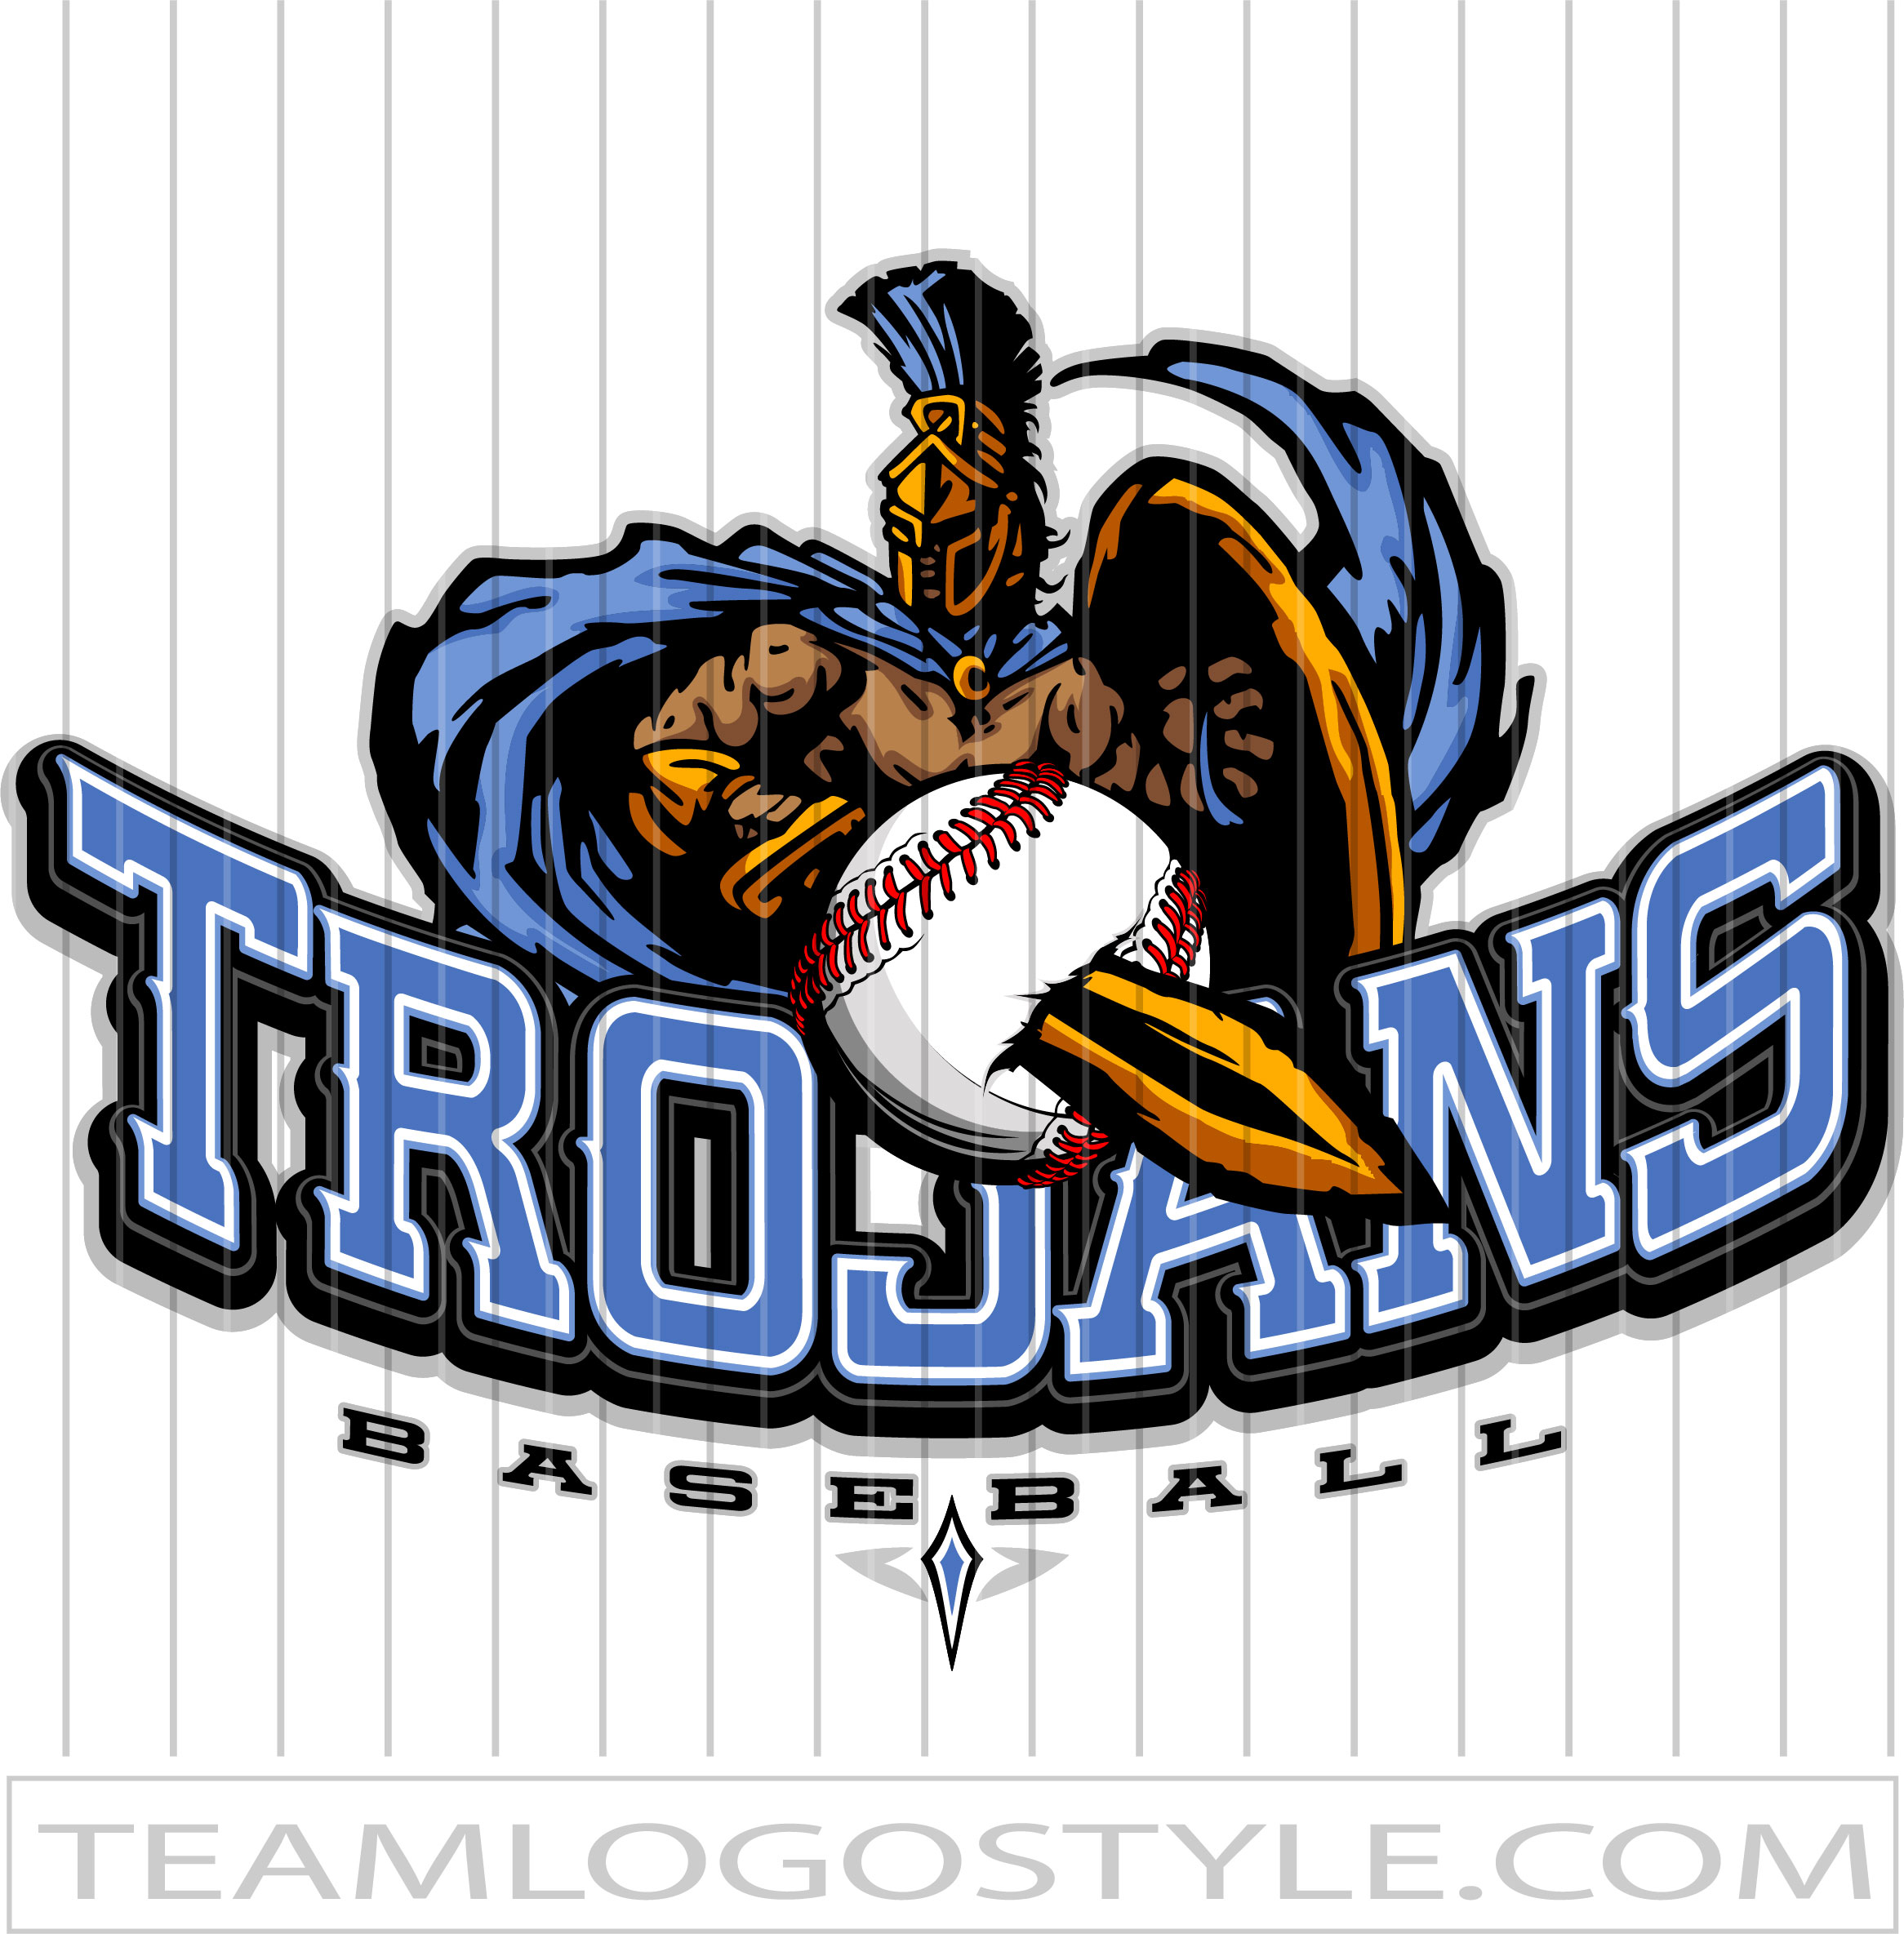 baseball logo designs